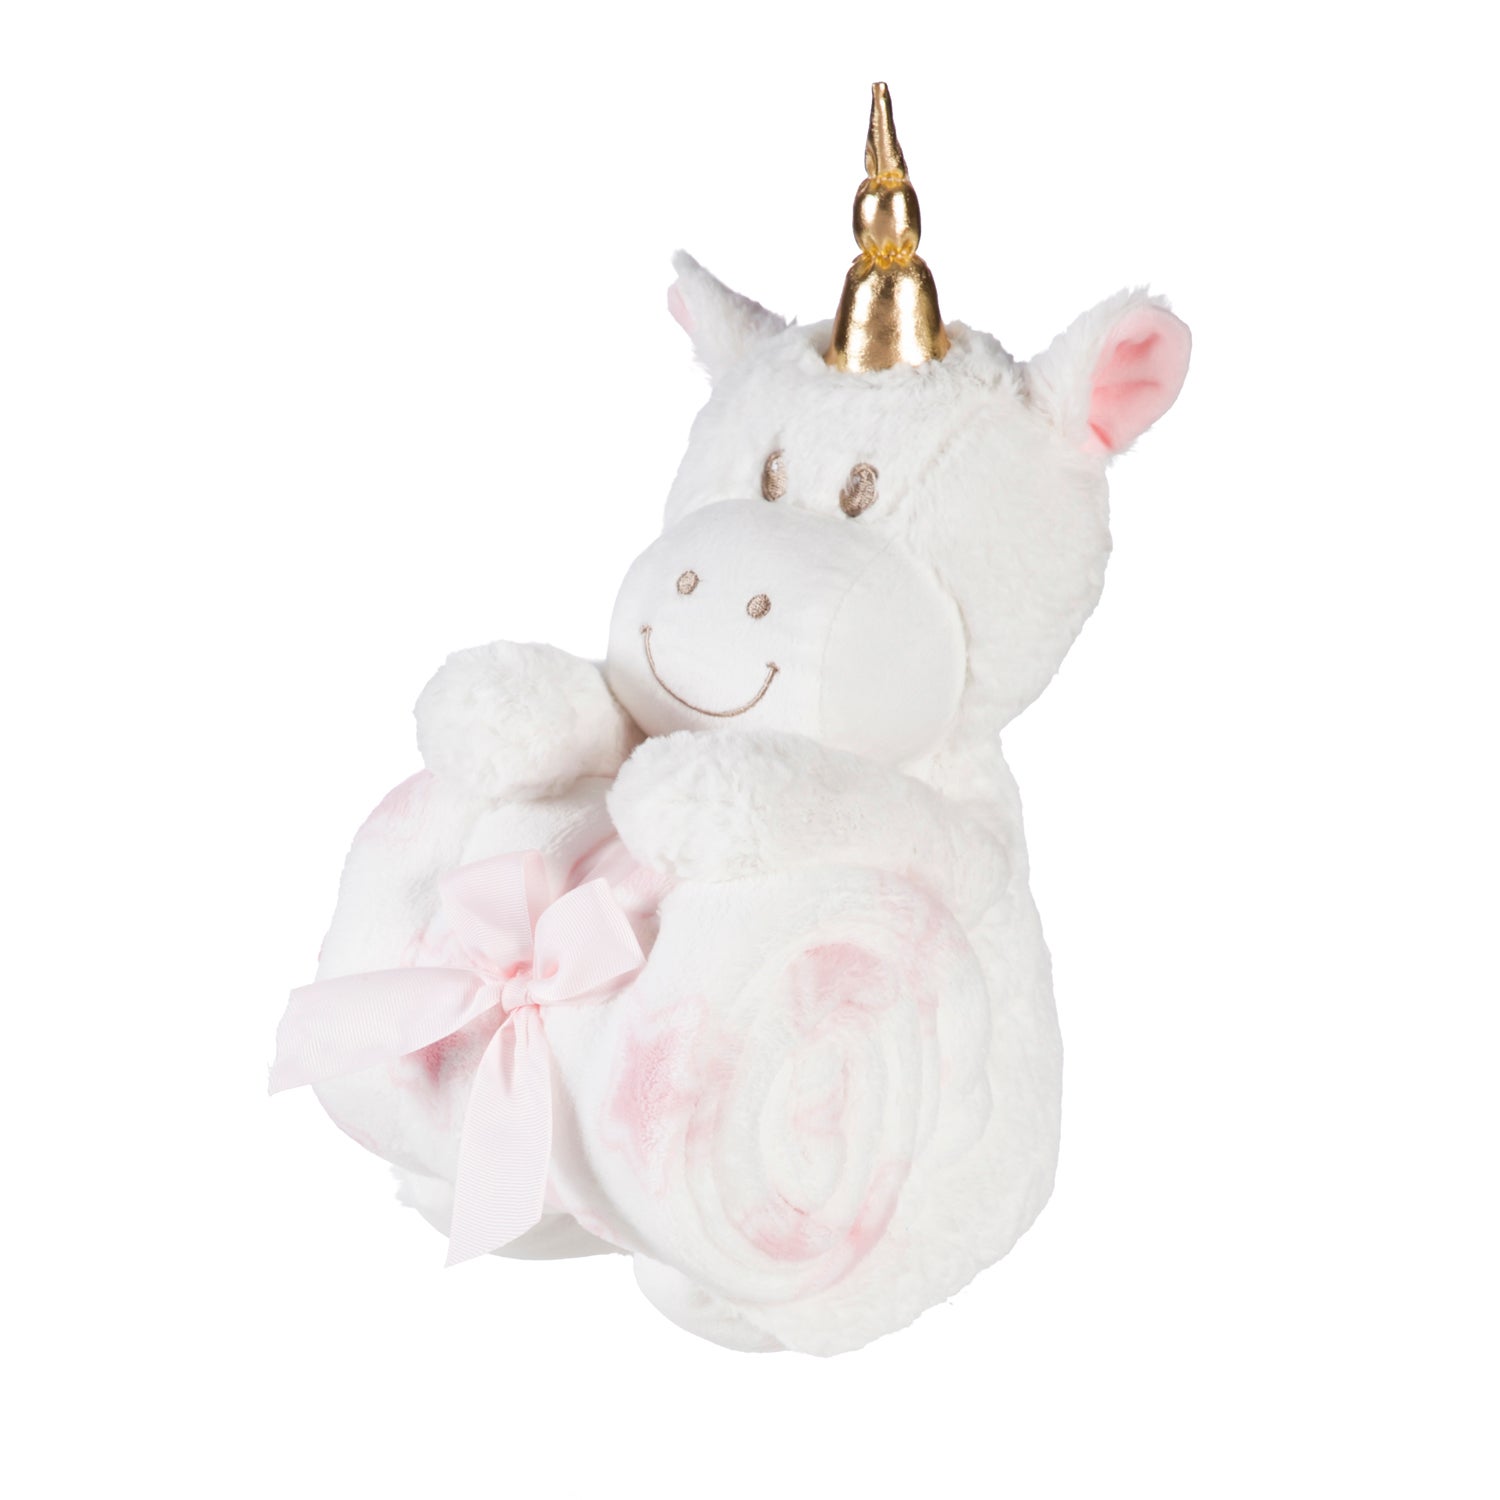 Cuddly Unicorn 10" Stuffed Animal w/ Blanket Gift Set, White